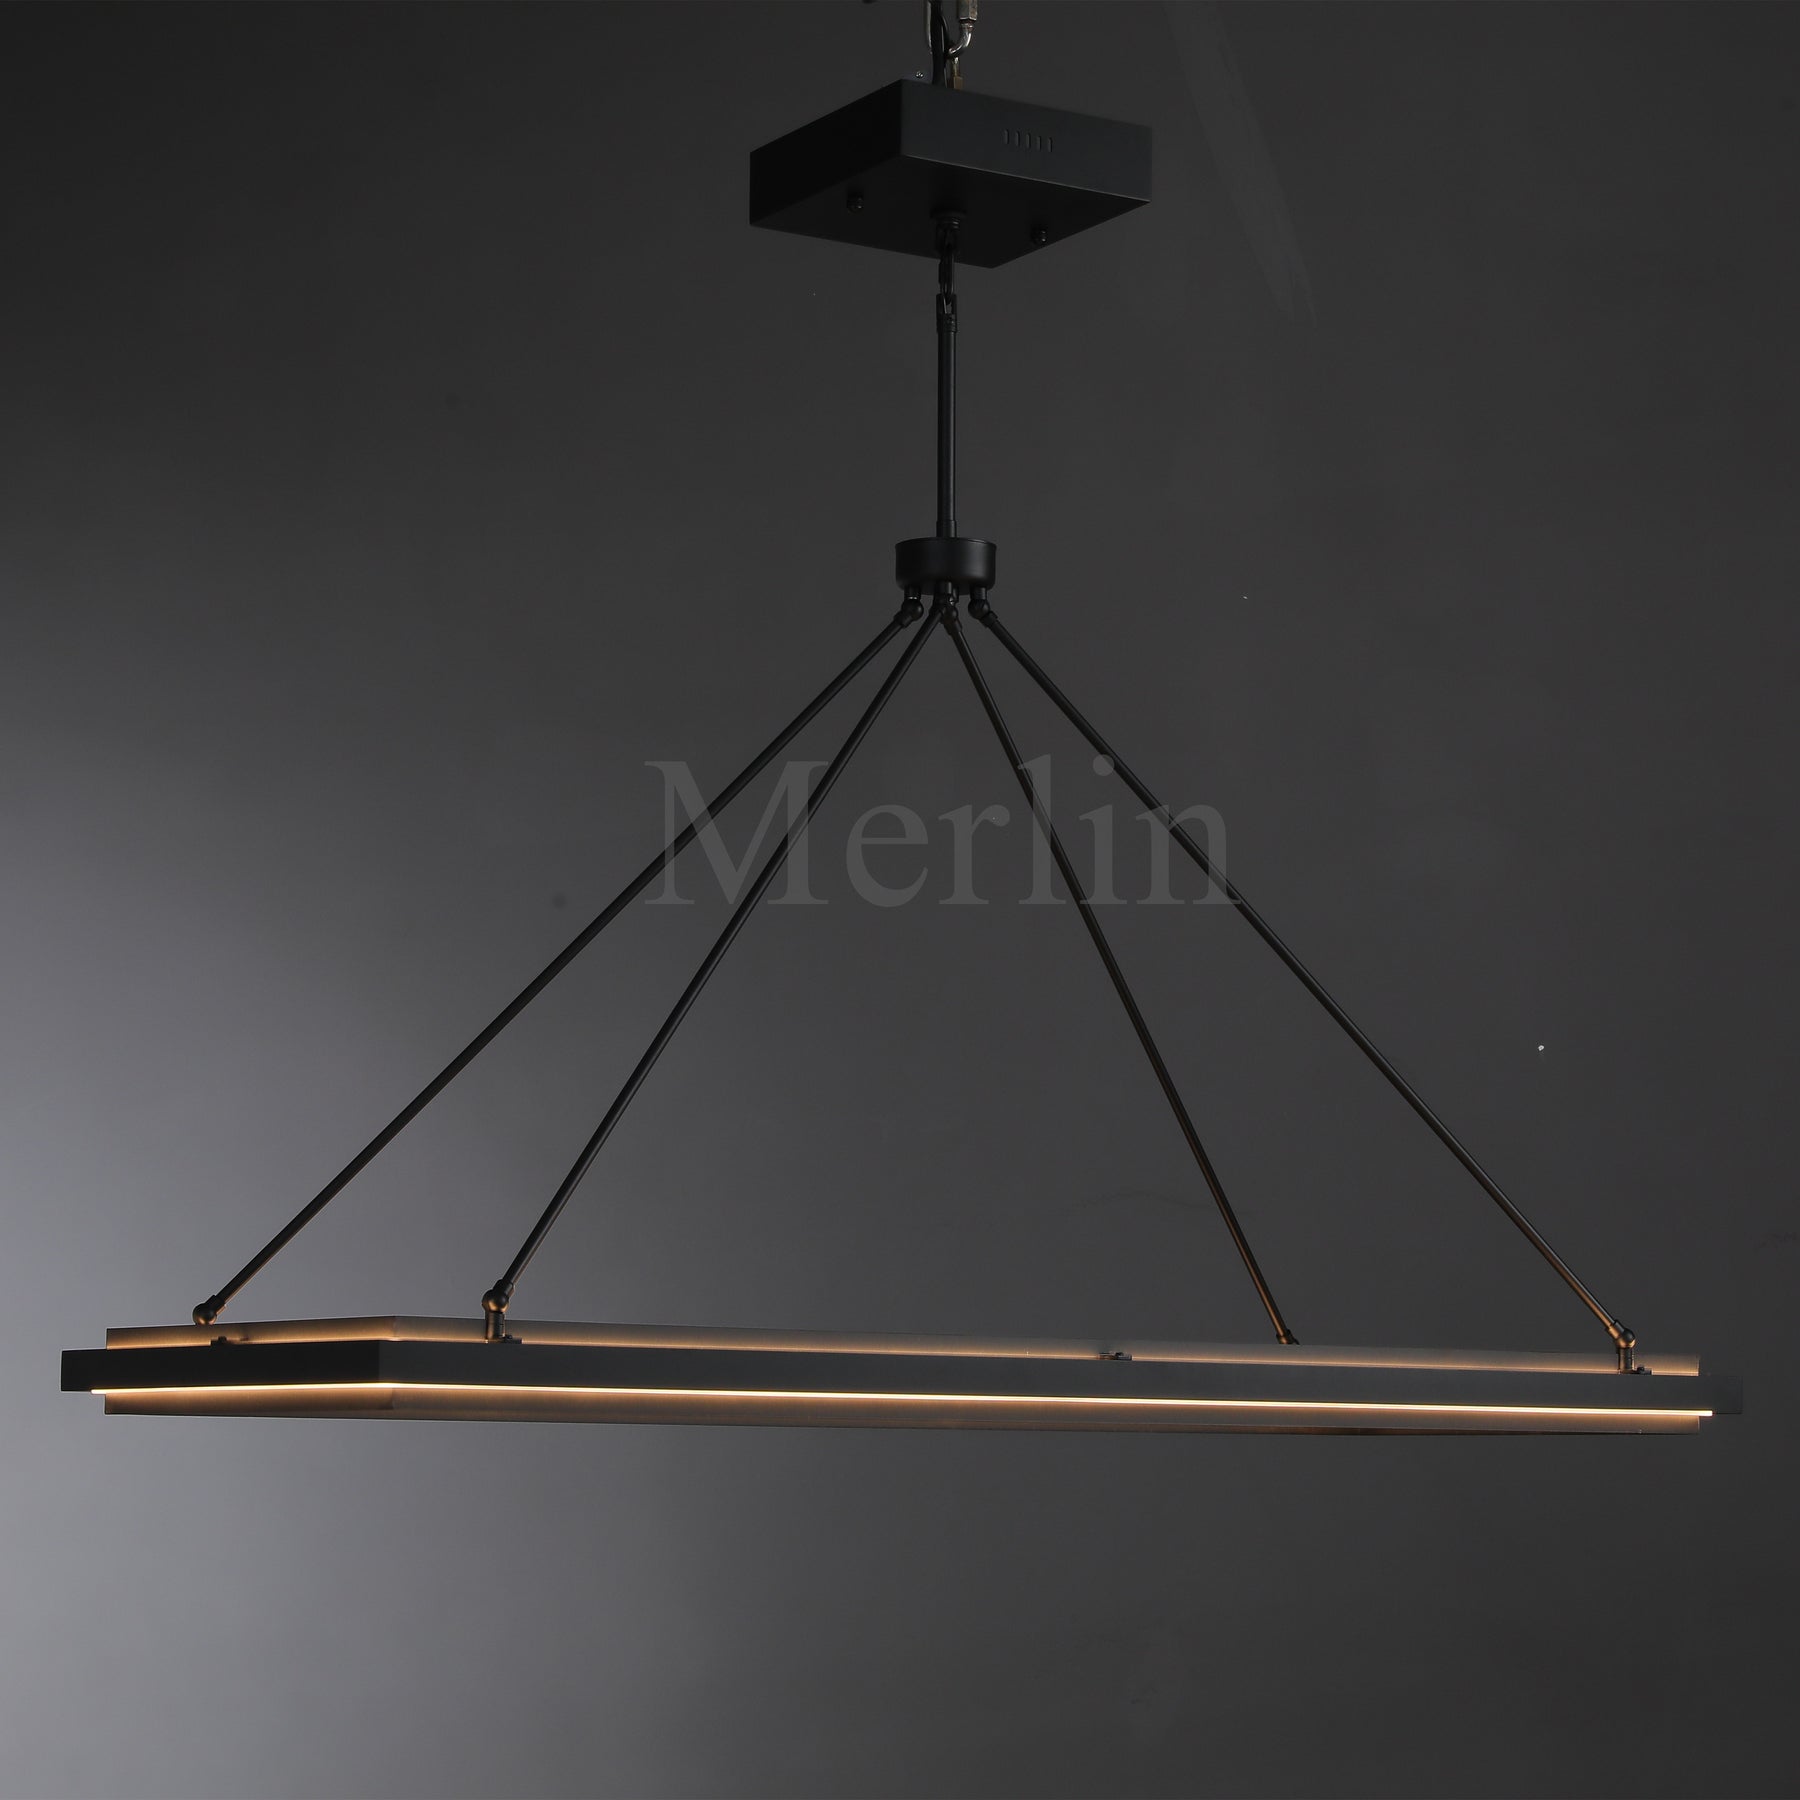 George Elegant Modern Lamp Fixture, Metal Chandelier for Living Room, Bedroom, Dining Room